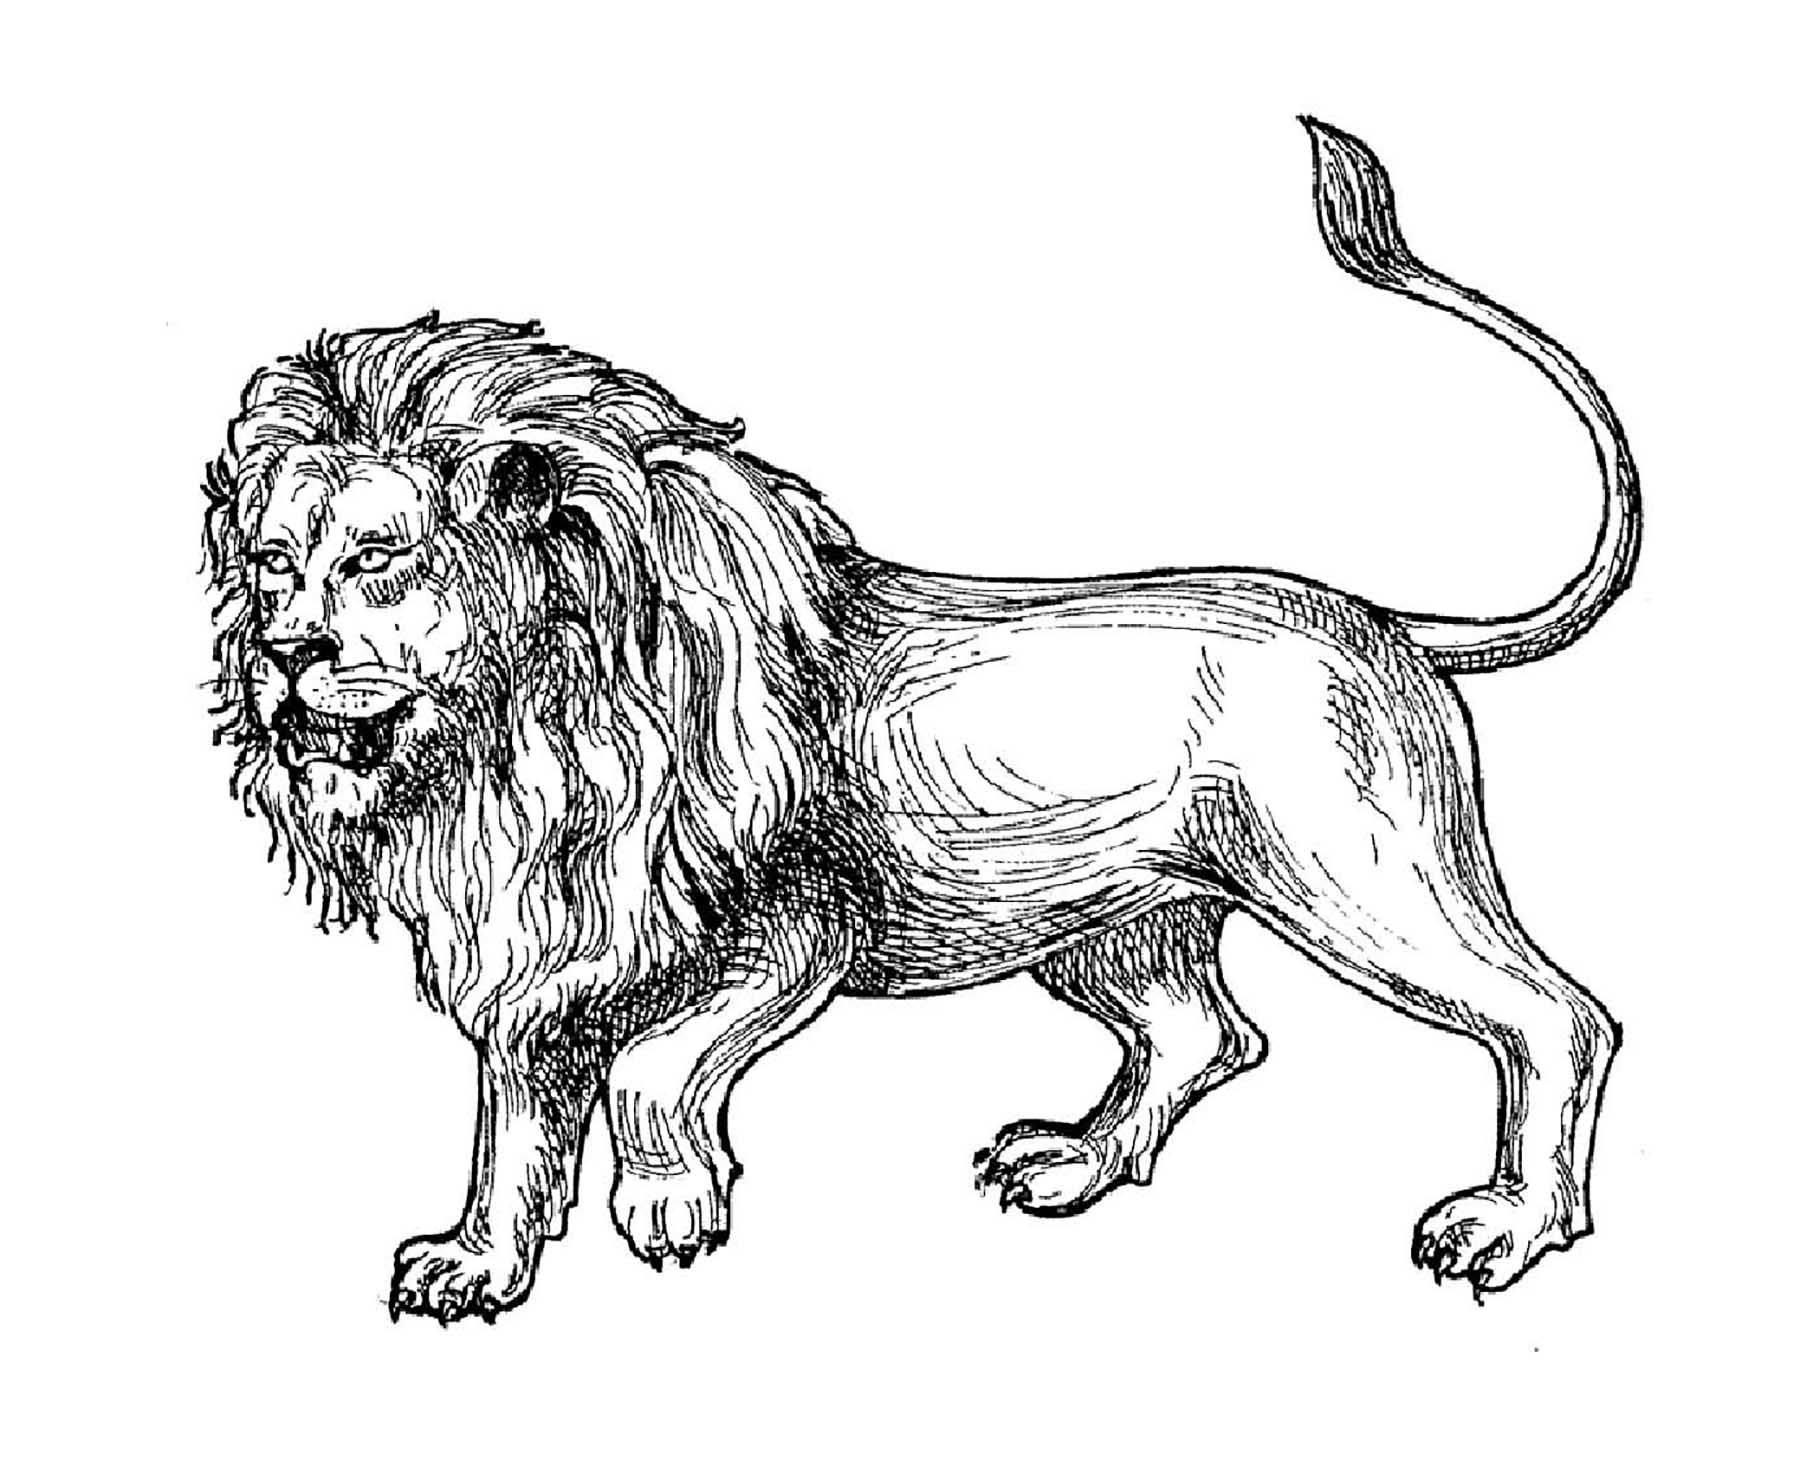 Illustration representing a lion